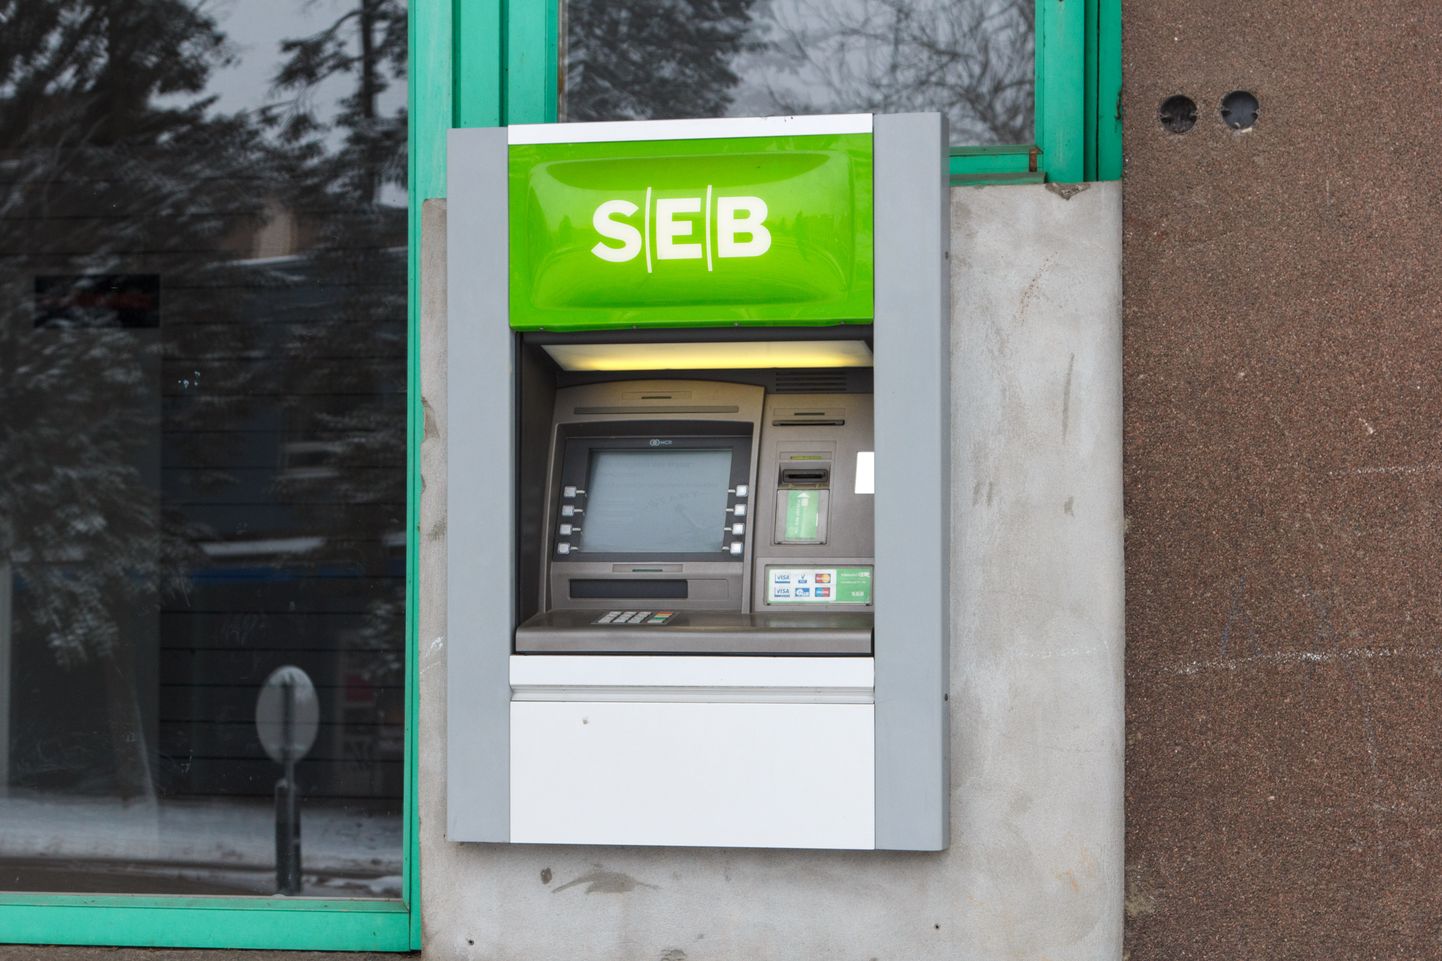 SEB pangaautomaat